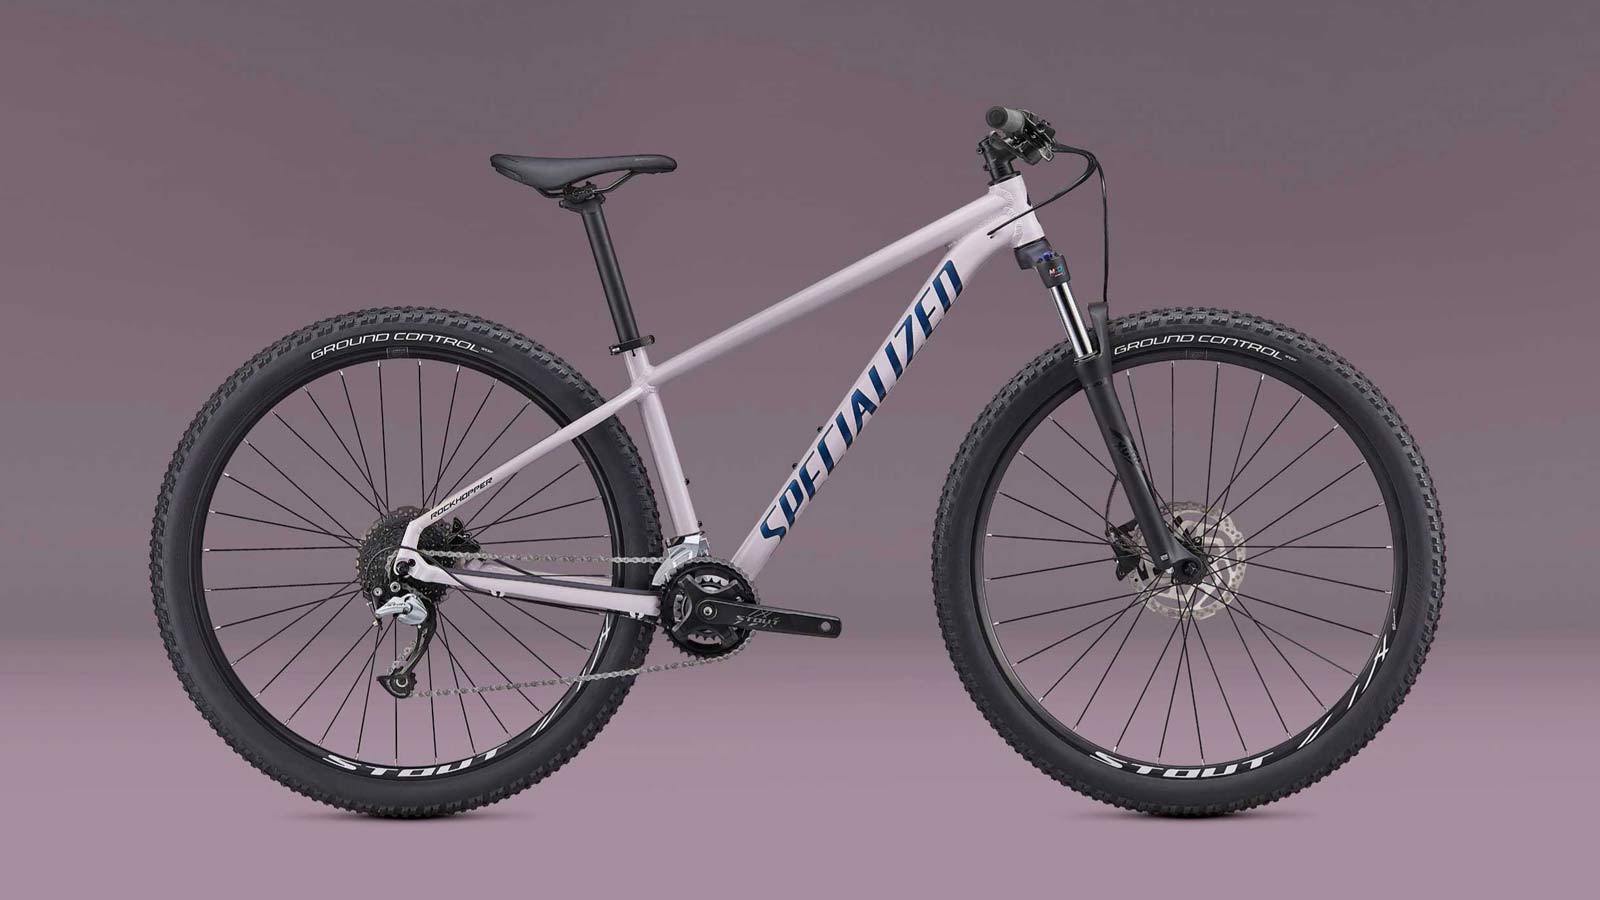 2021 Specialized Rockhopper mountain bike, affordable aluminum alloy MTB hardtail